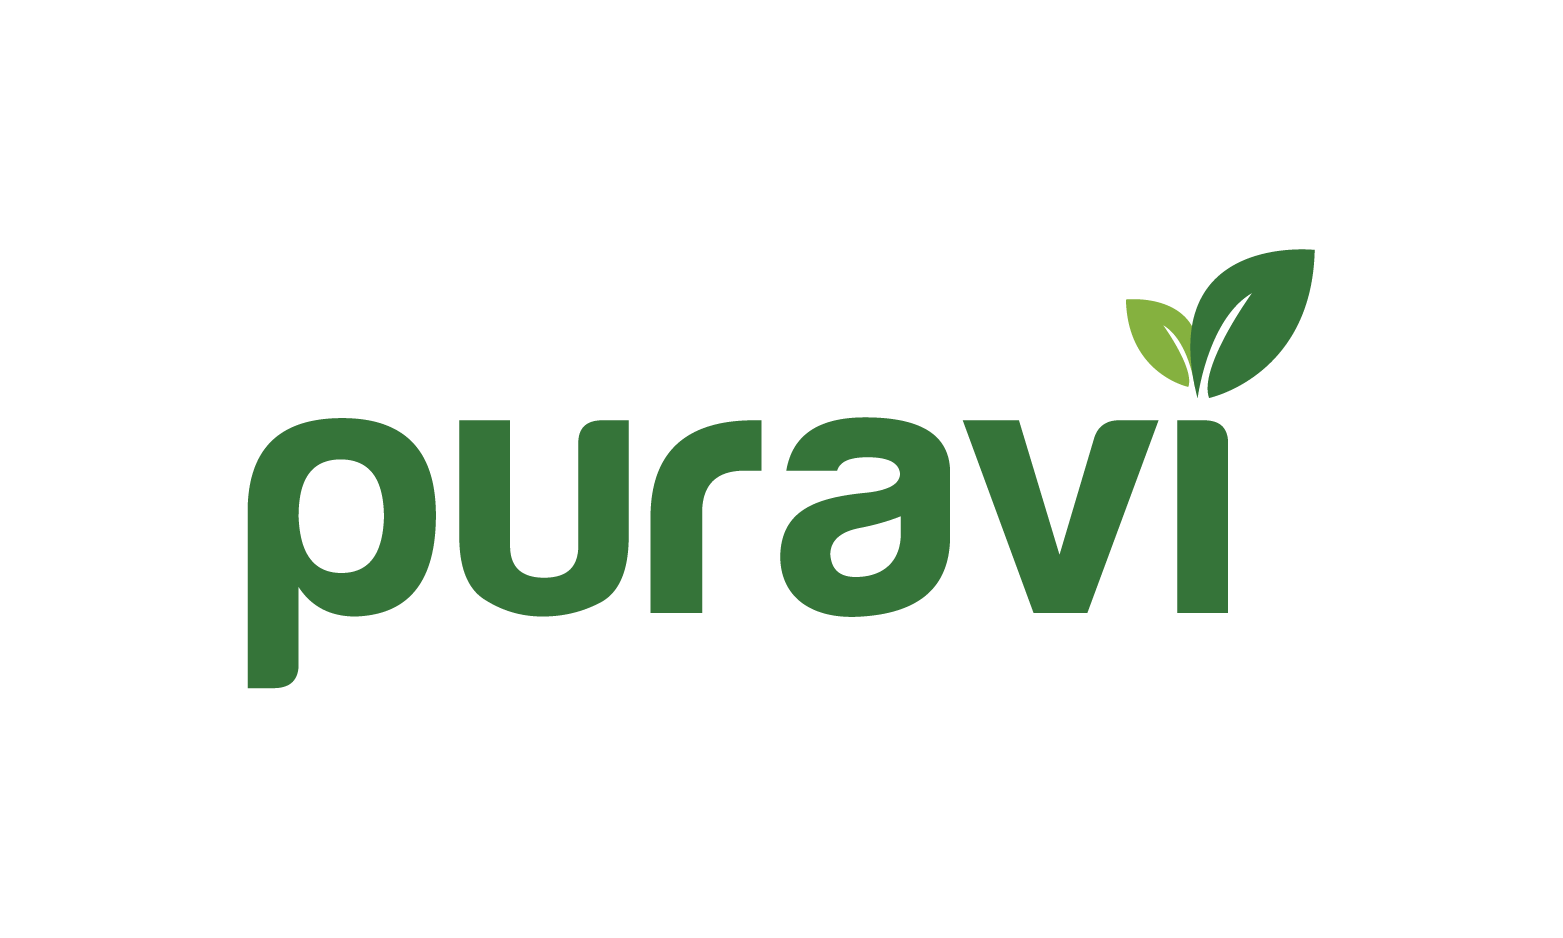 Puravi.com - Creative brandable domain for sale